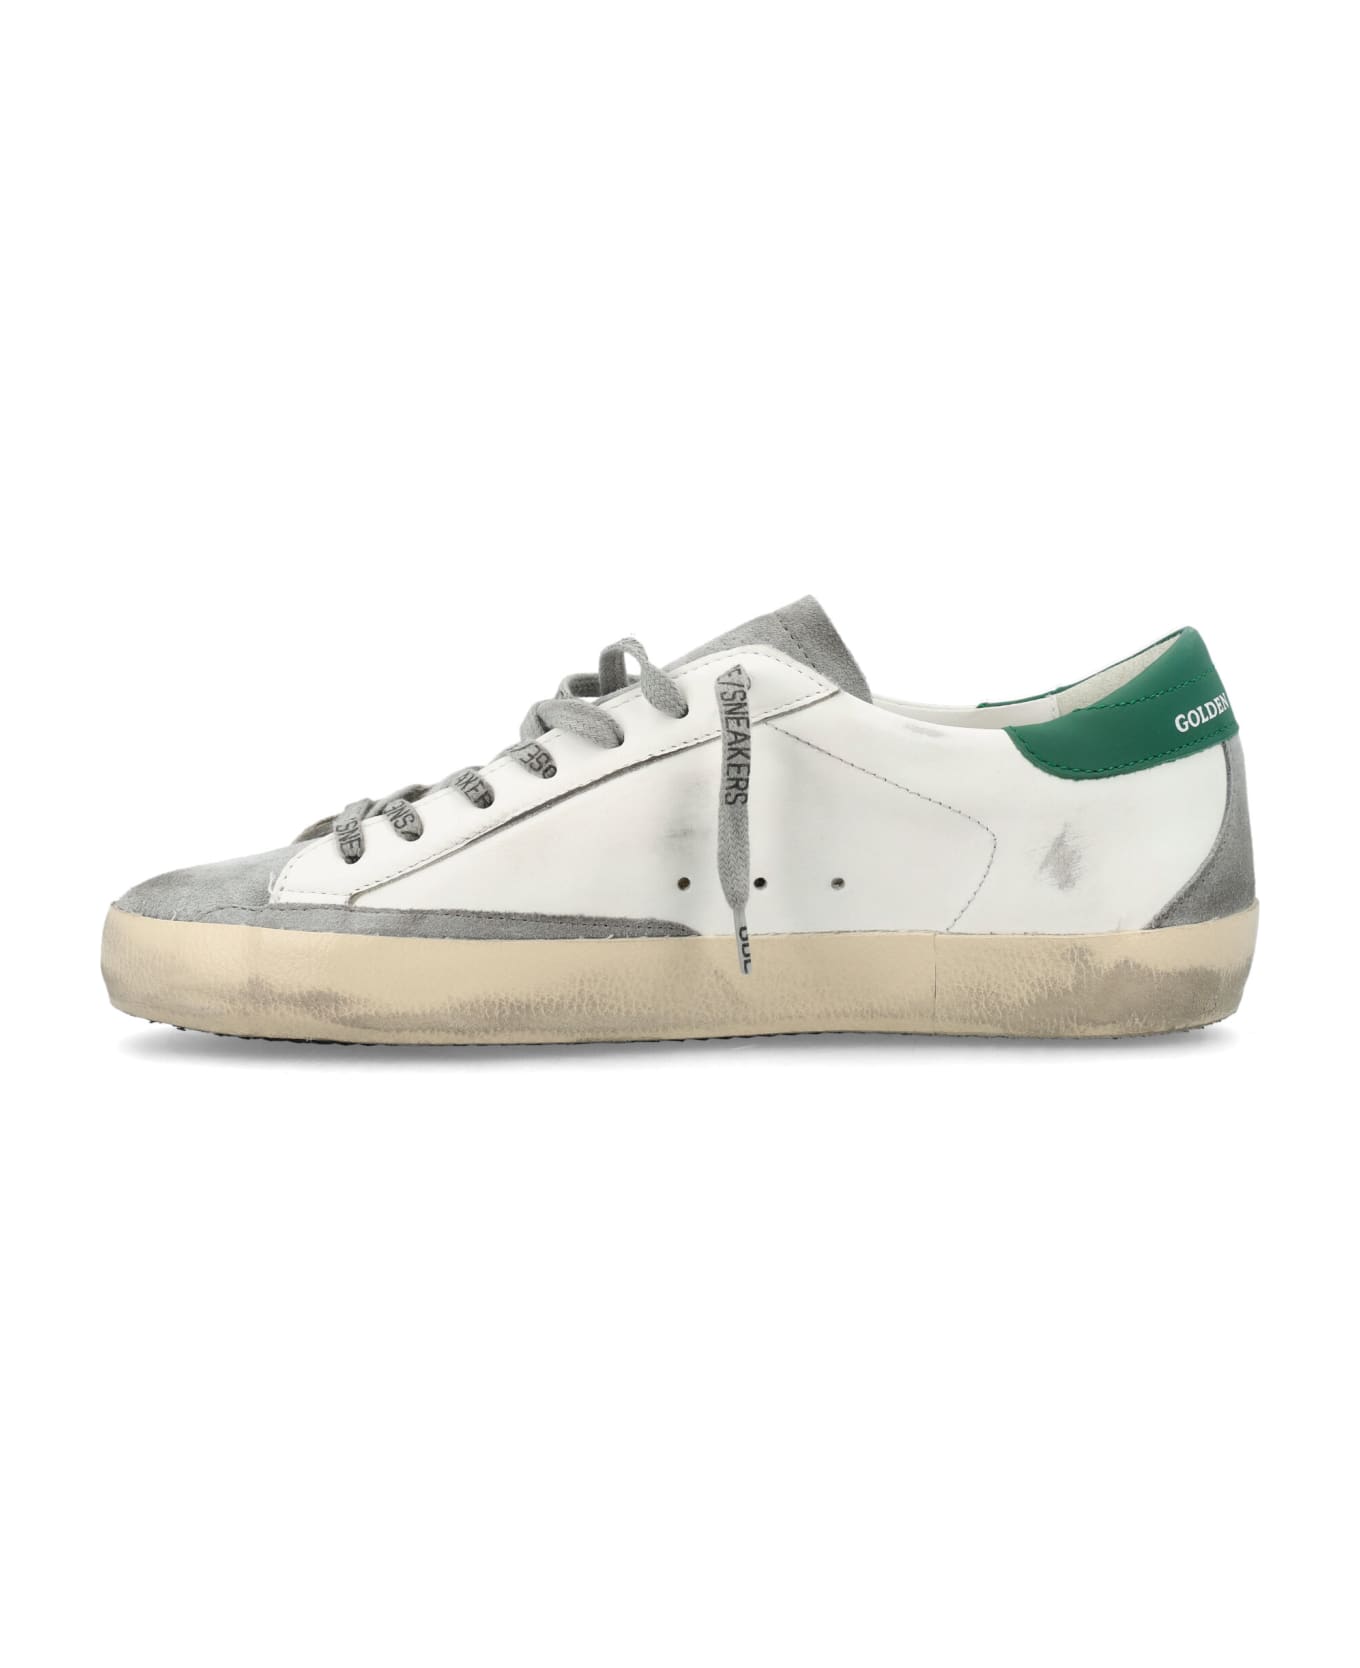 Golden Goose Super-star Sneakers - White/Grey/Silver/Green